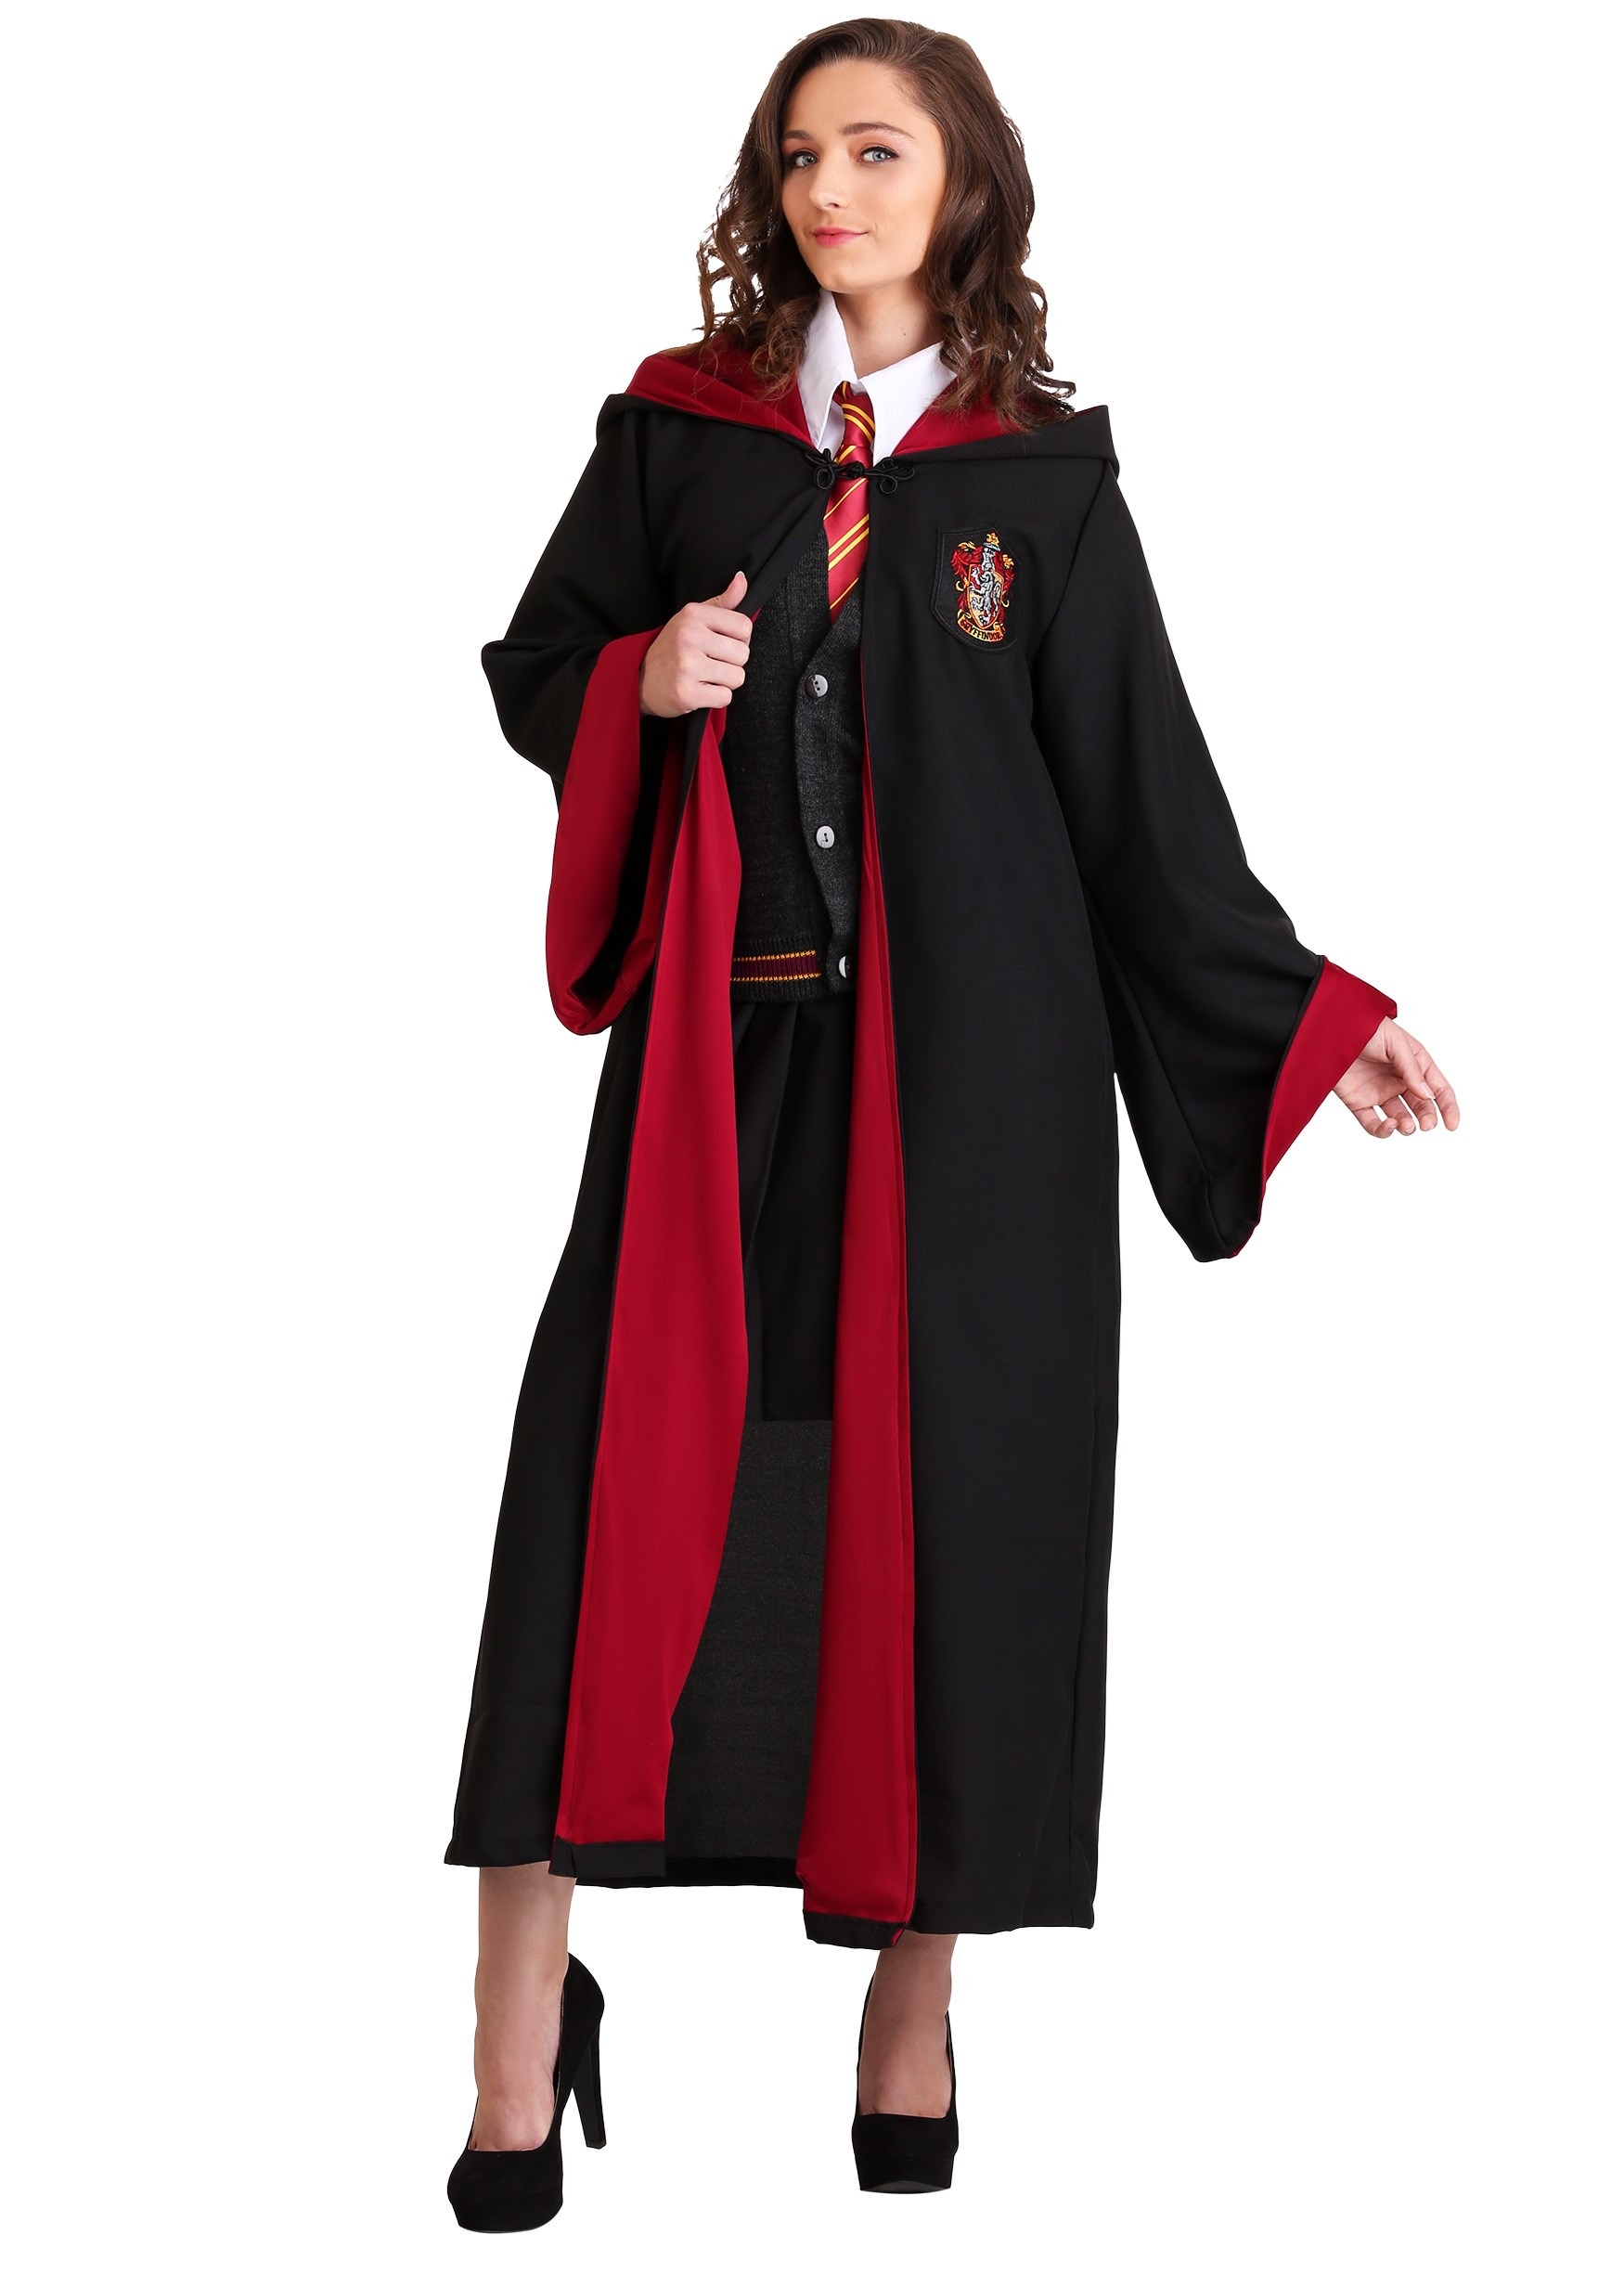 Details about   Kid & Adult Hermione Granger Cosplay Costume Gryffindor Uniform Halloween Suit 